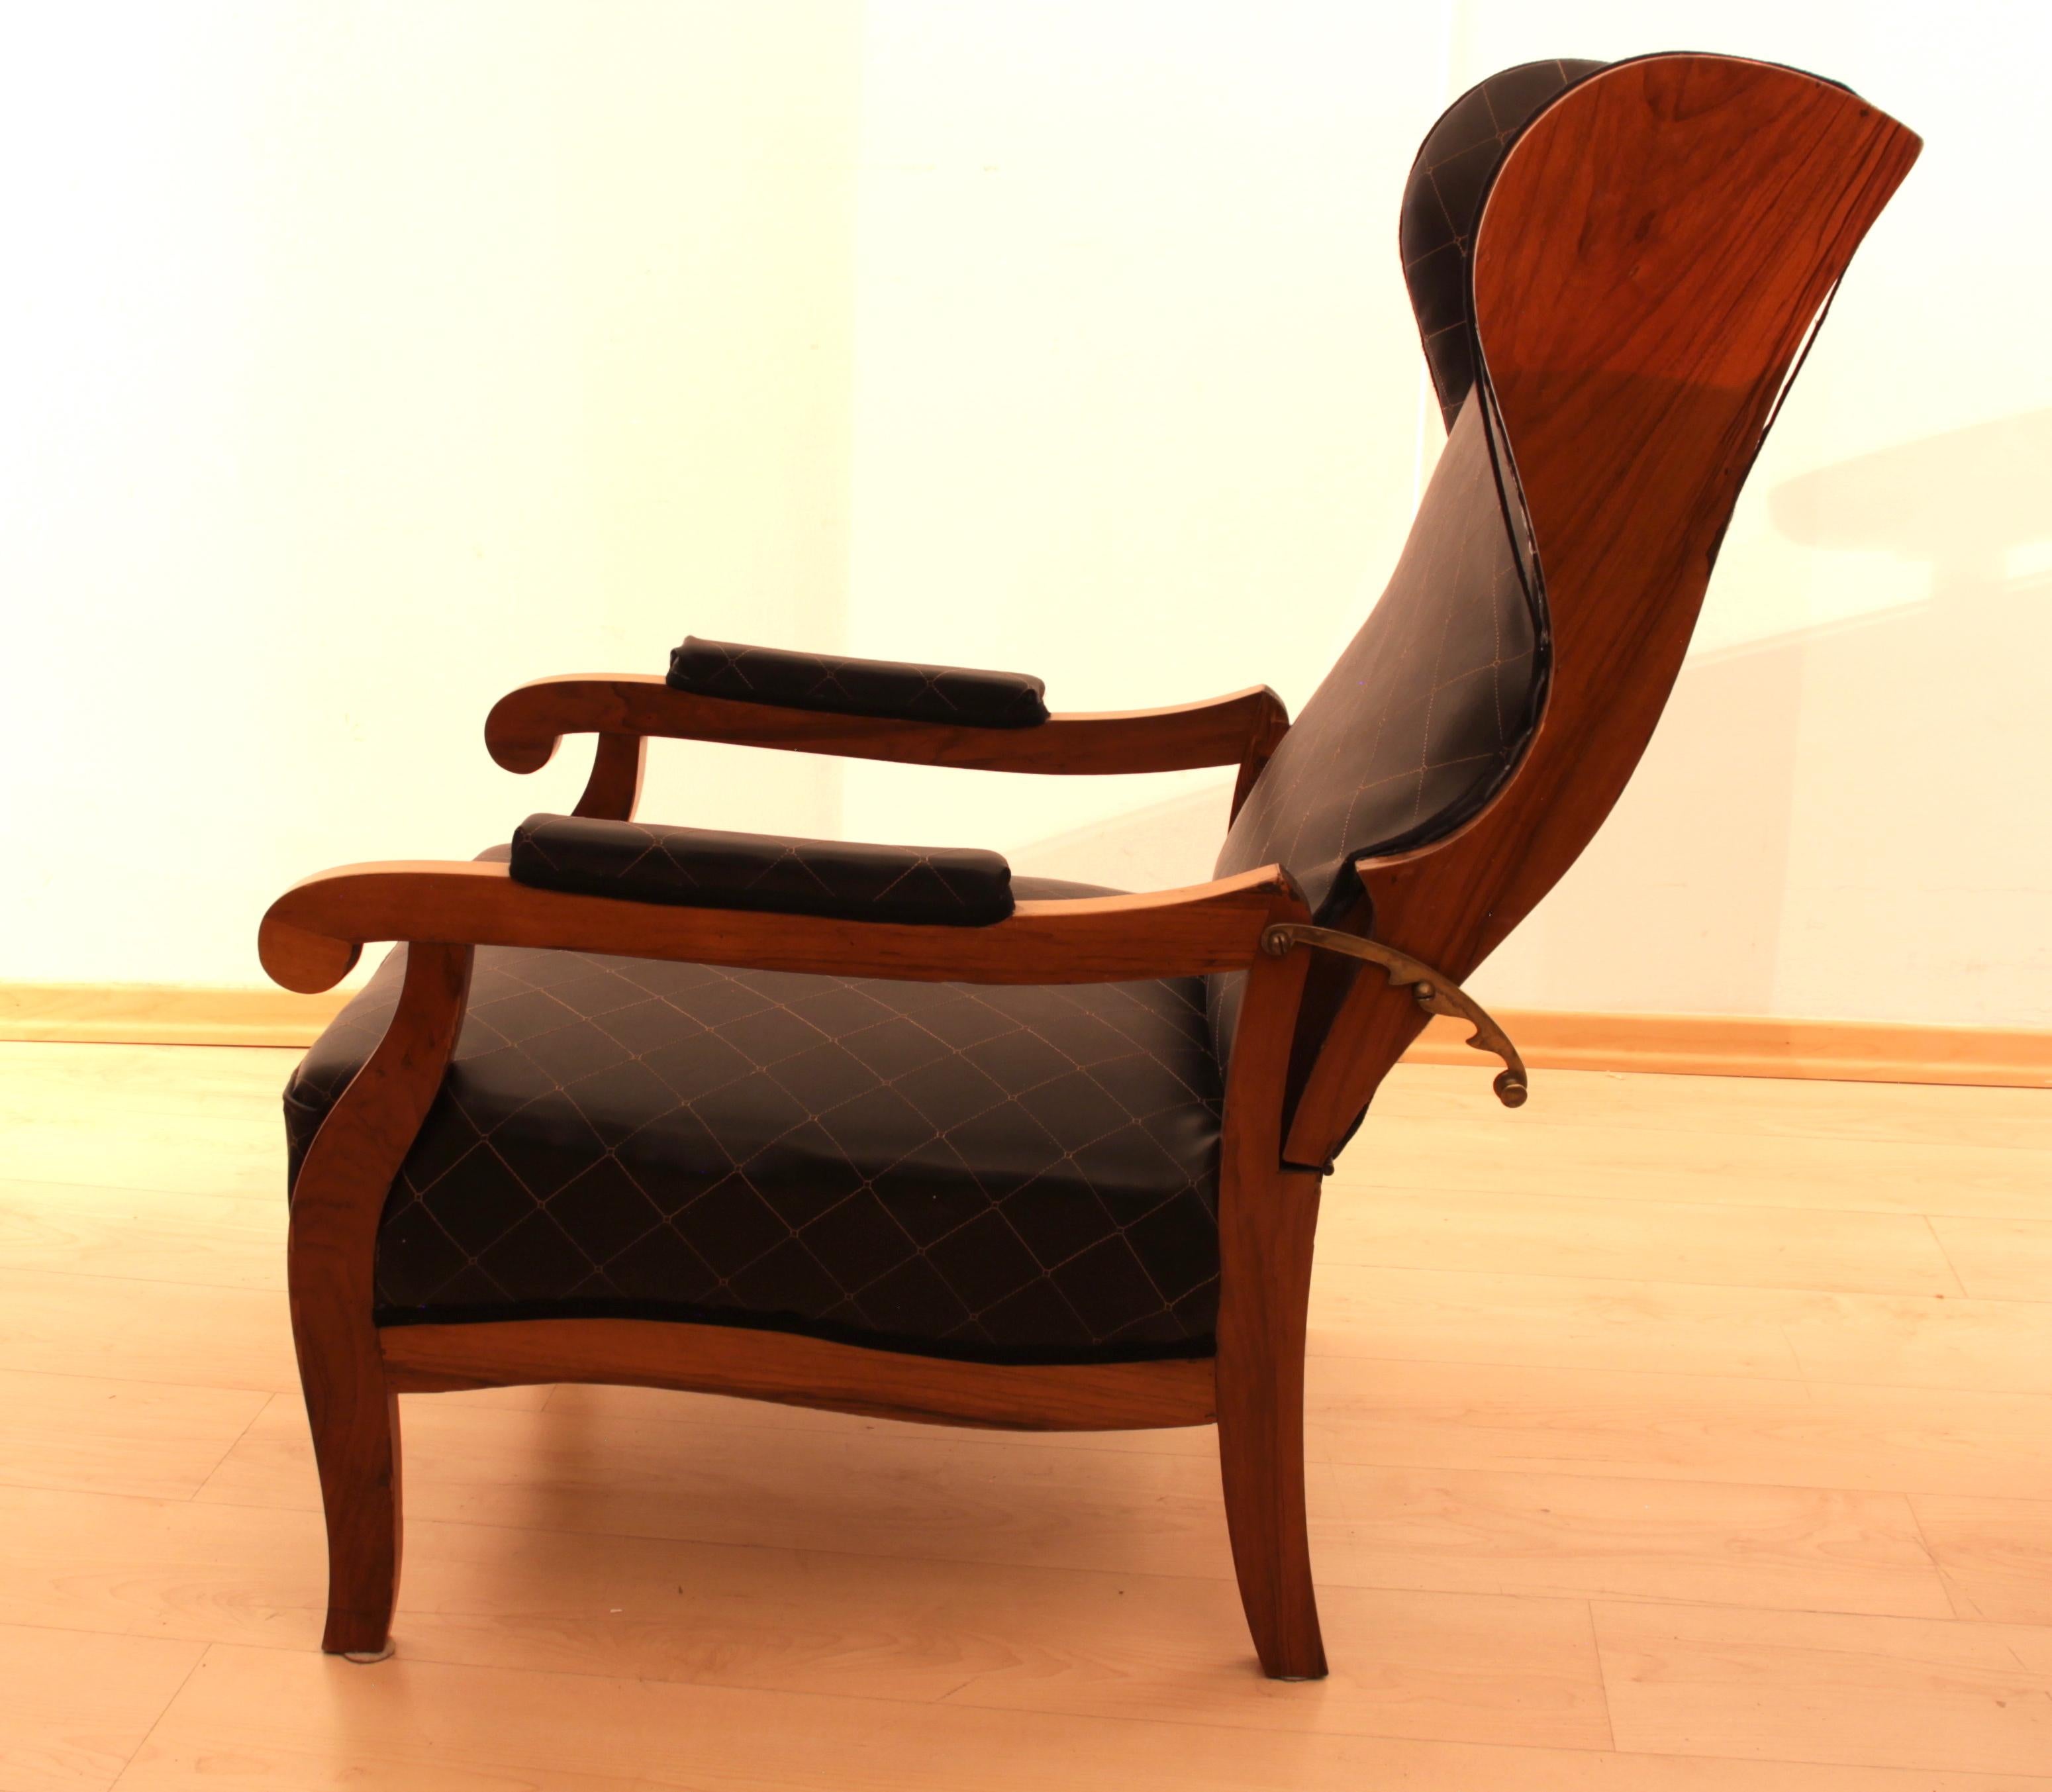 Polished Biedermeier Wing Chair, Adjustable, Walnut, South Germany, circa 1820